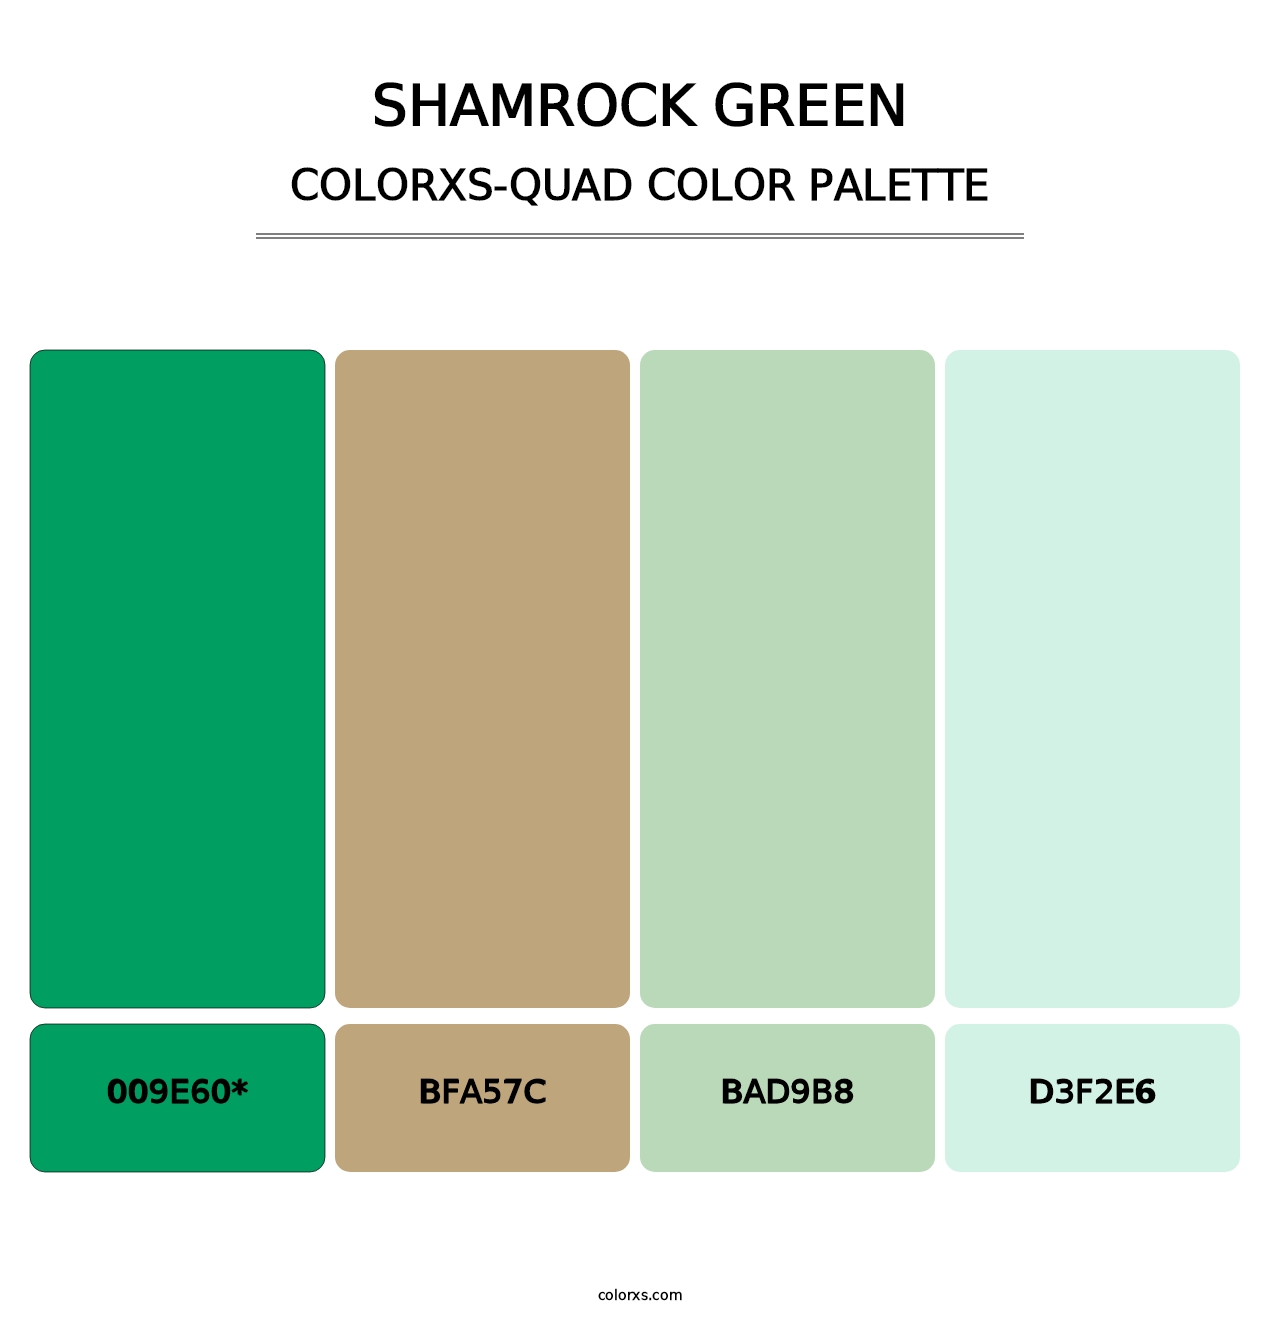 Shamrock Green - Colorxs Quad Palette